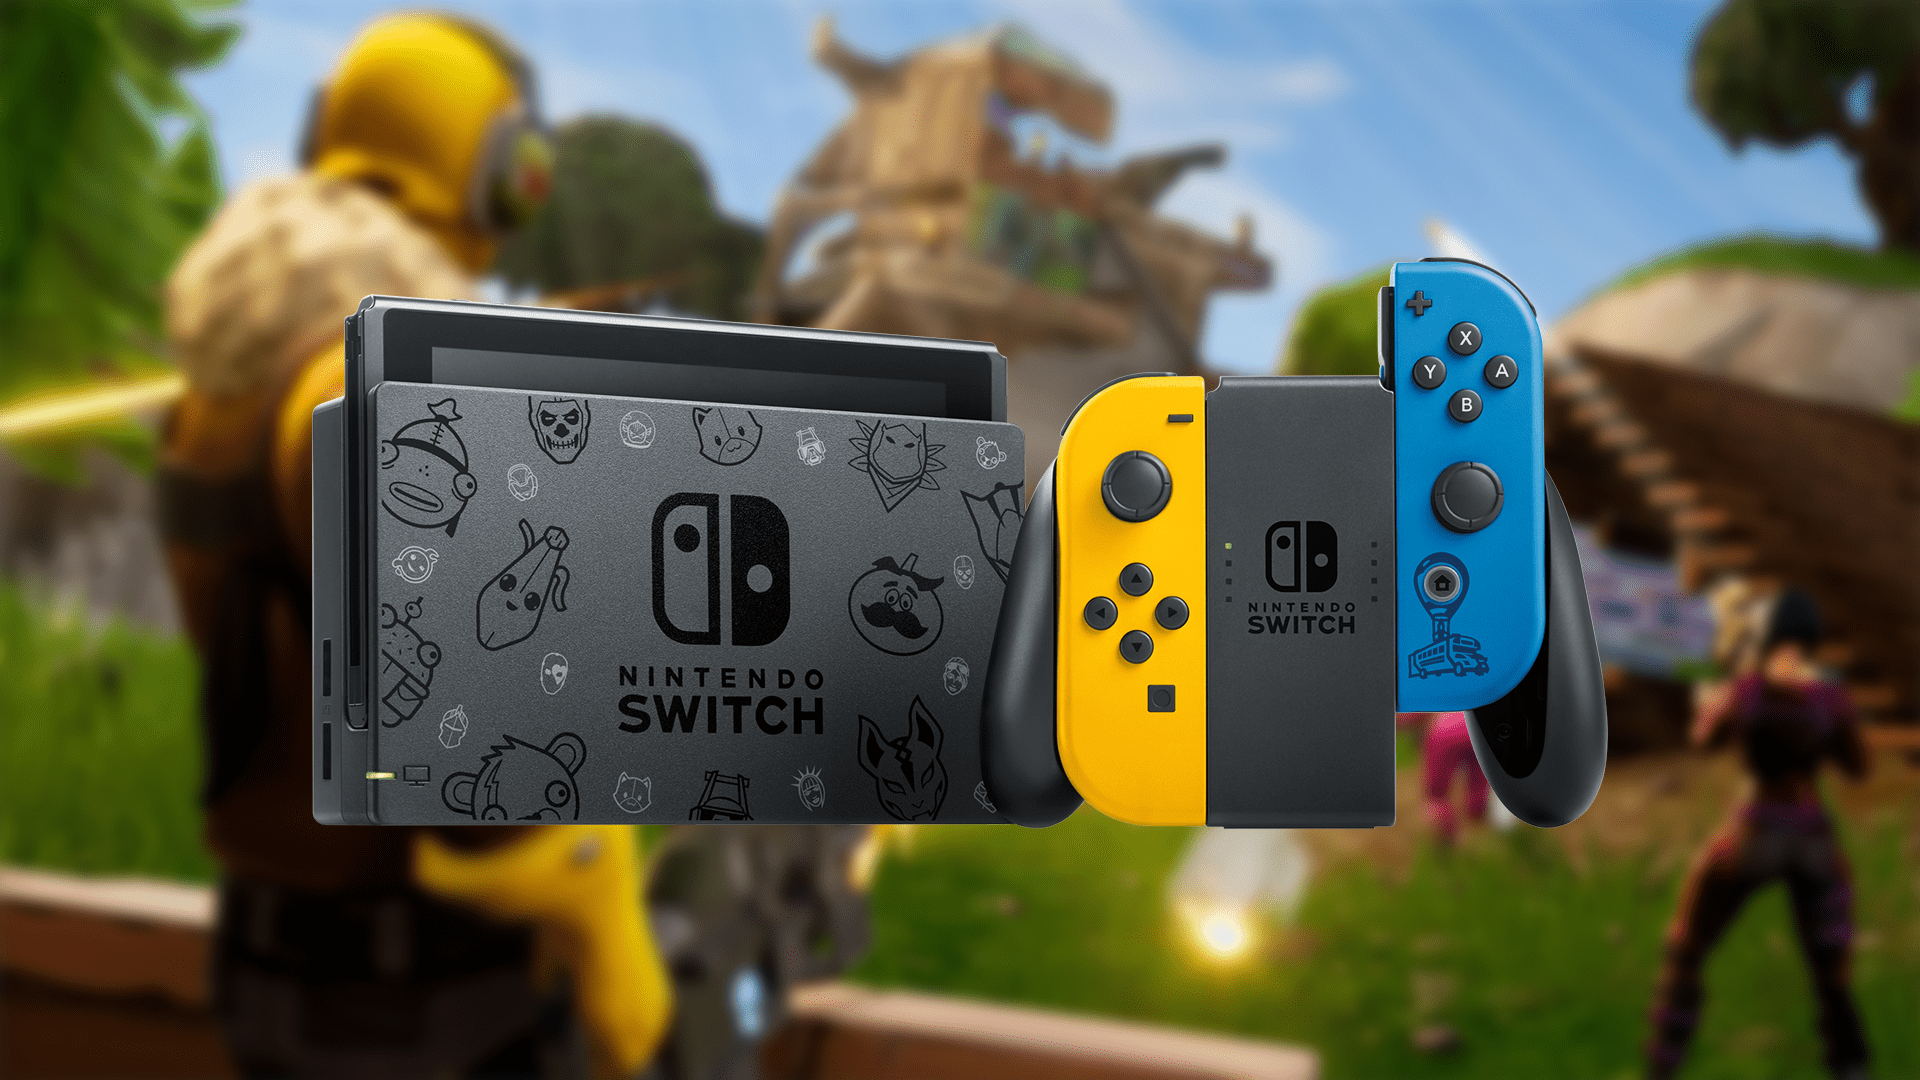 Моды на nintendo switch. Асфальт Нинтендо свитч топ. Размер Nintendo Switch Edition. Farm together на Нинтендо свитч. Ghost Runner на Нинтендо свитч.